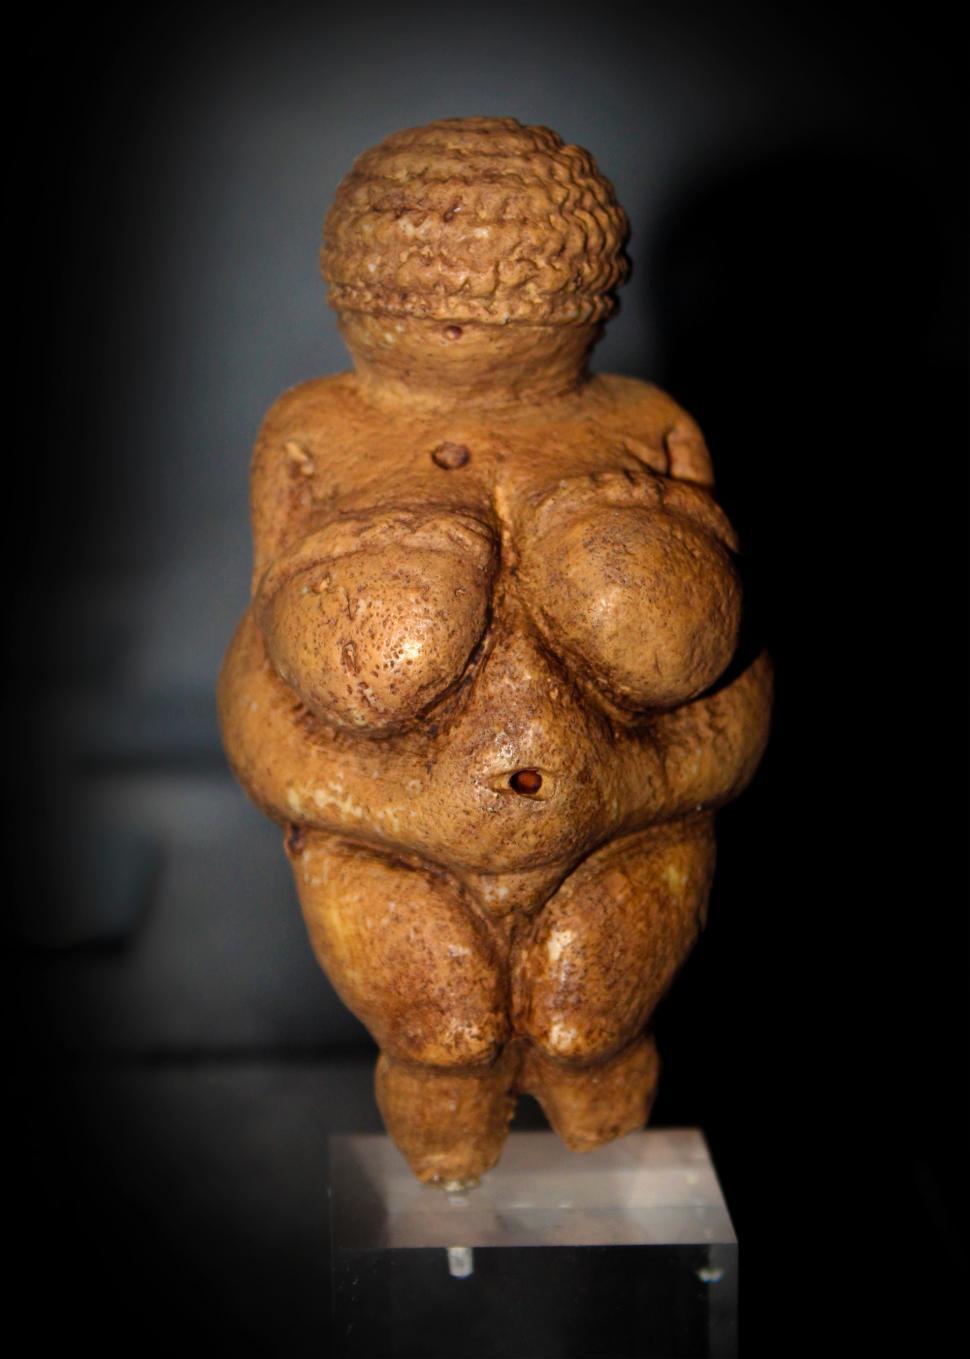 Download Free Stock Photo of Venus of Willendorf - European Upper Paleolithic Art 